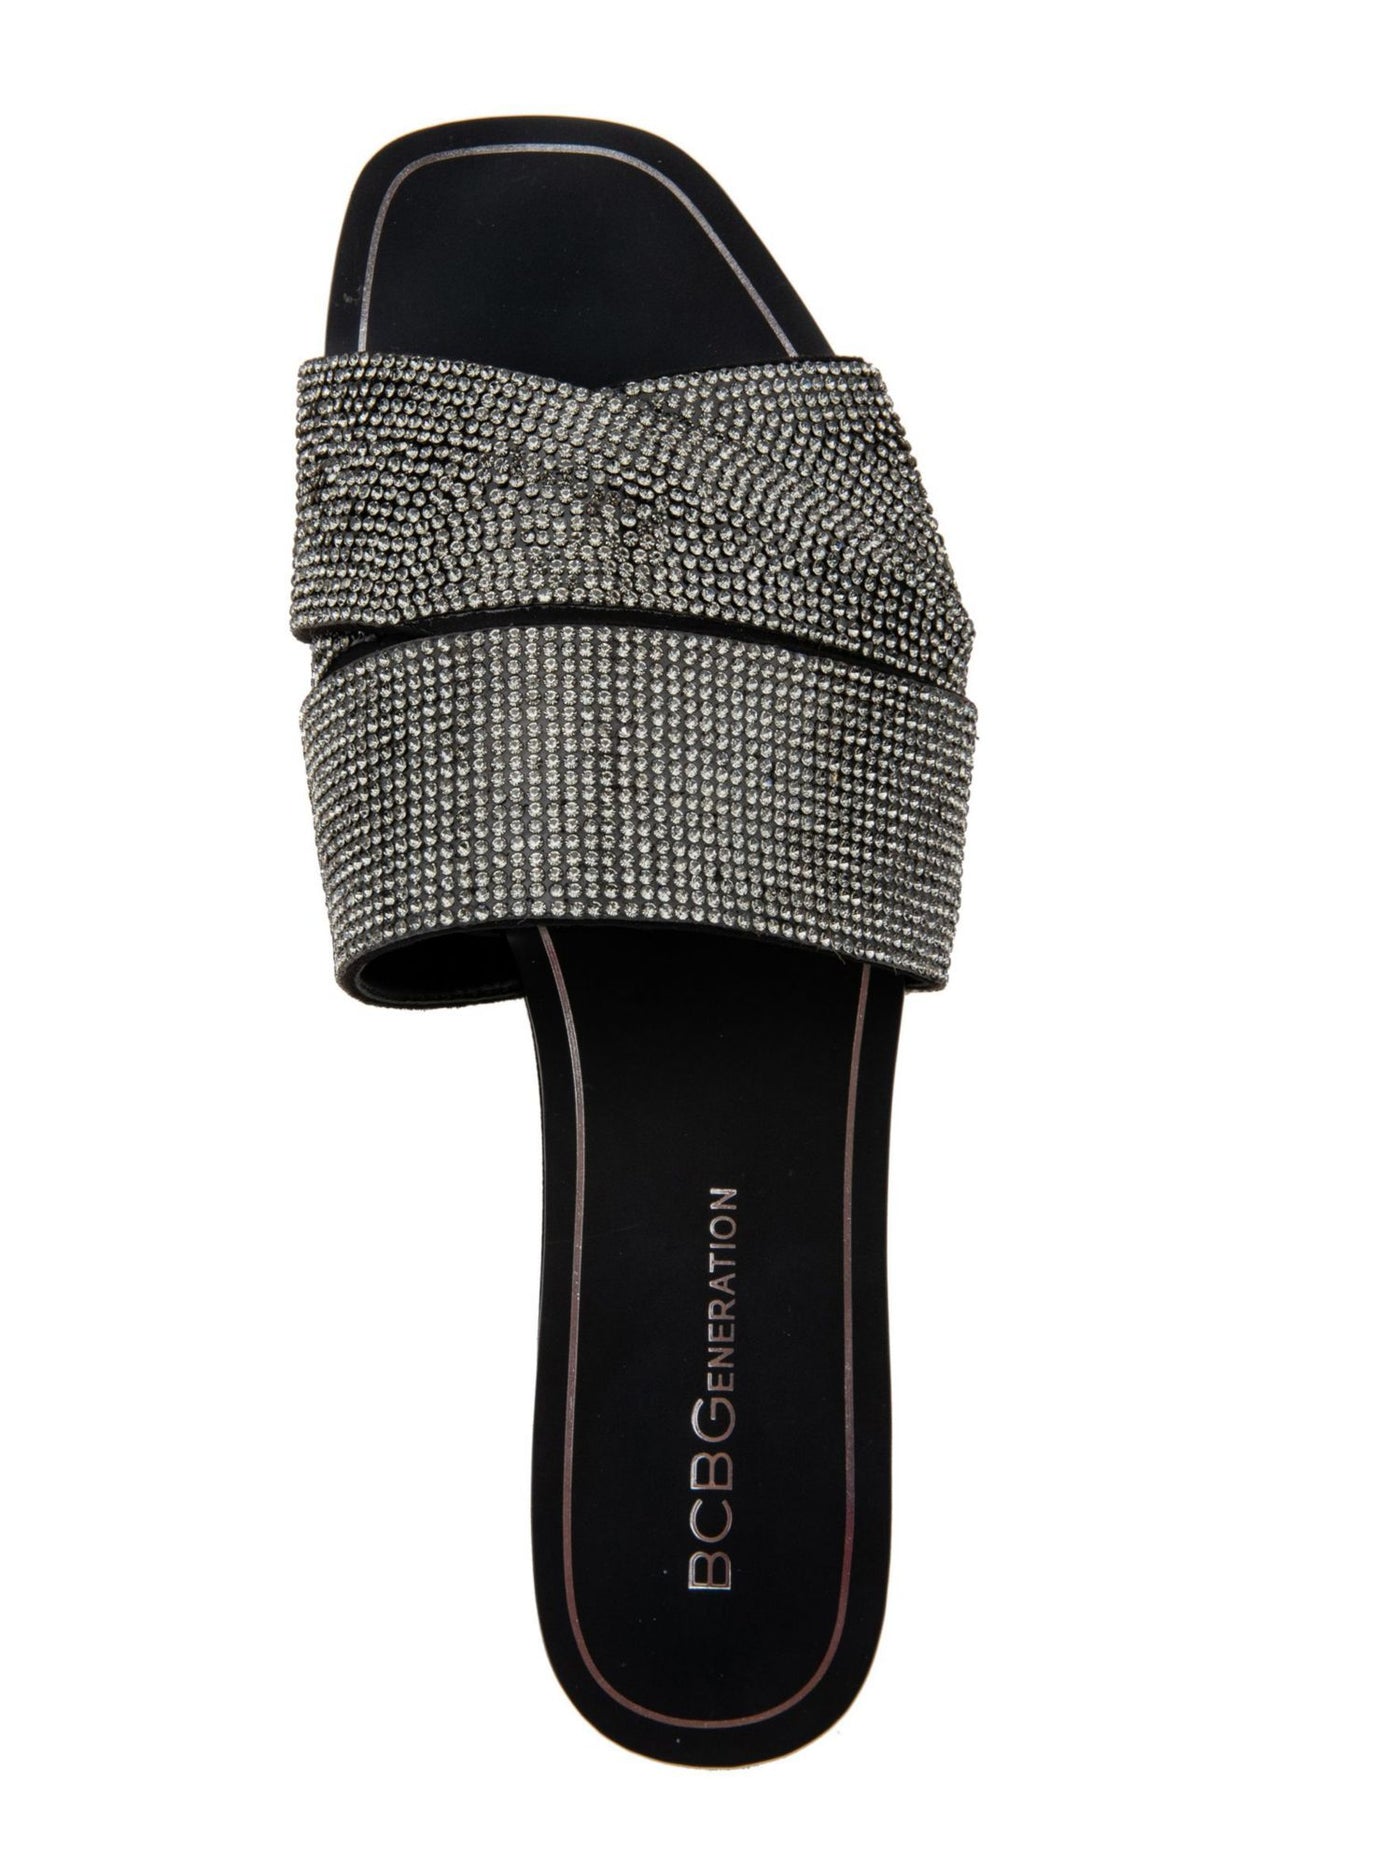 BCBGENERATION Womens Black Embellished Kandace Square Toe Slip On Slide Sandals Shoes 6 M